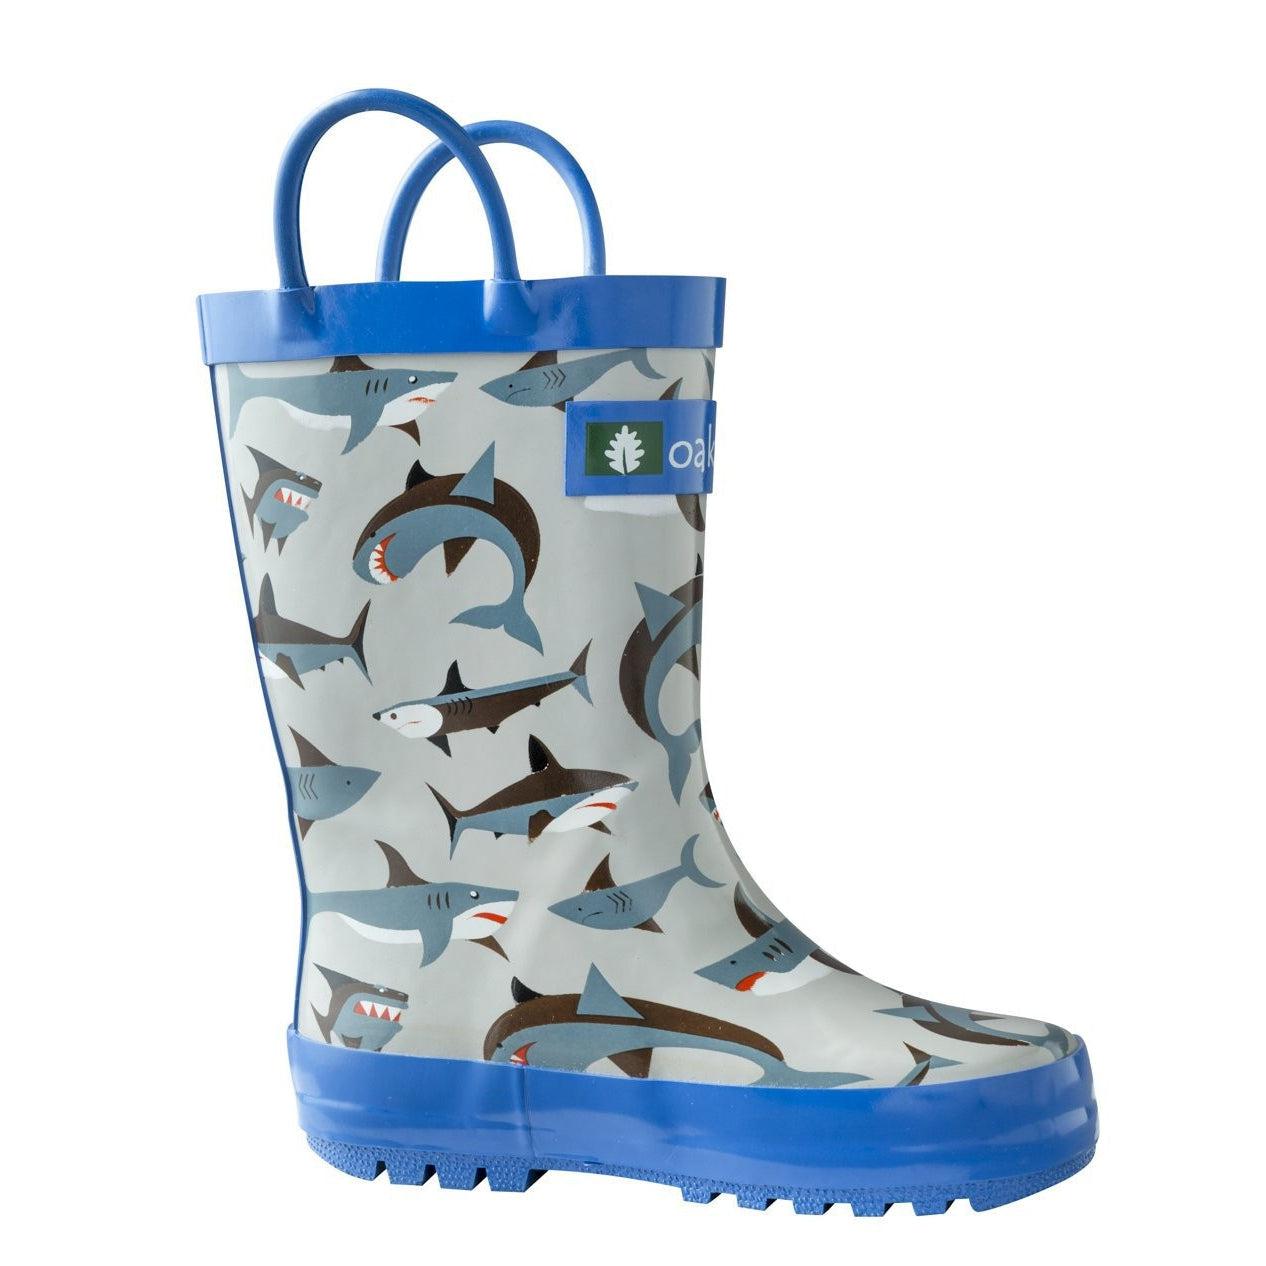 OAKI - Shark Frenzy Loop Handle Rubber Rain Boots